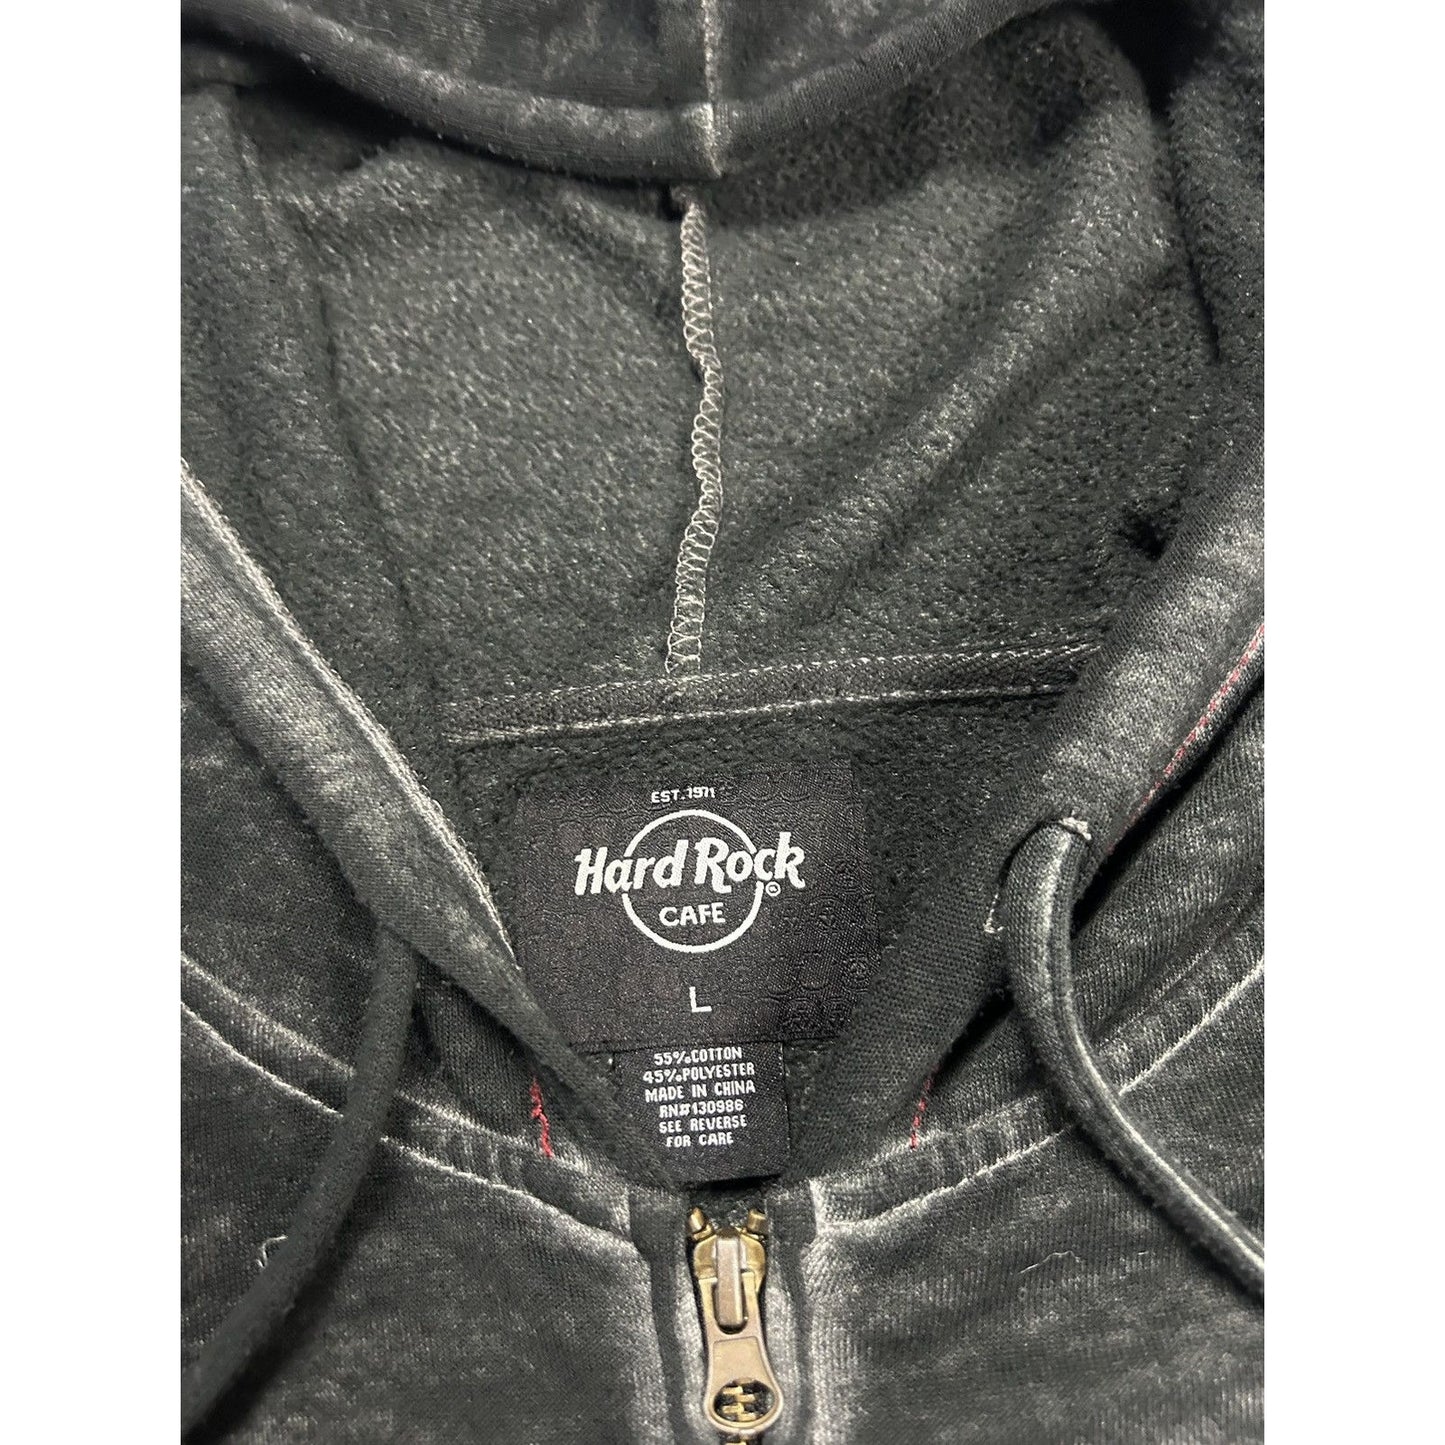 Hard Rock Cafe zip hoodie thin big logo vintage Y2K Seville